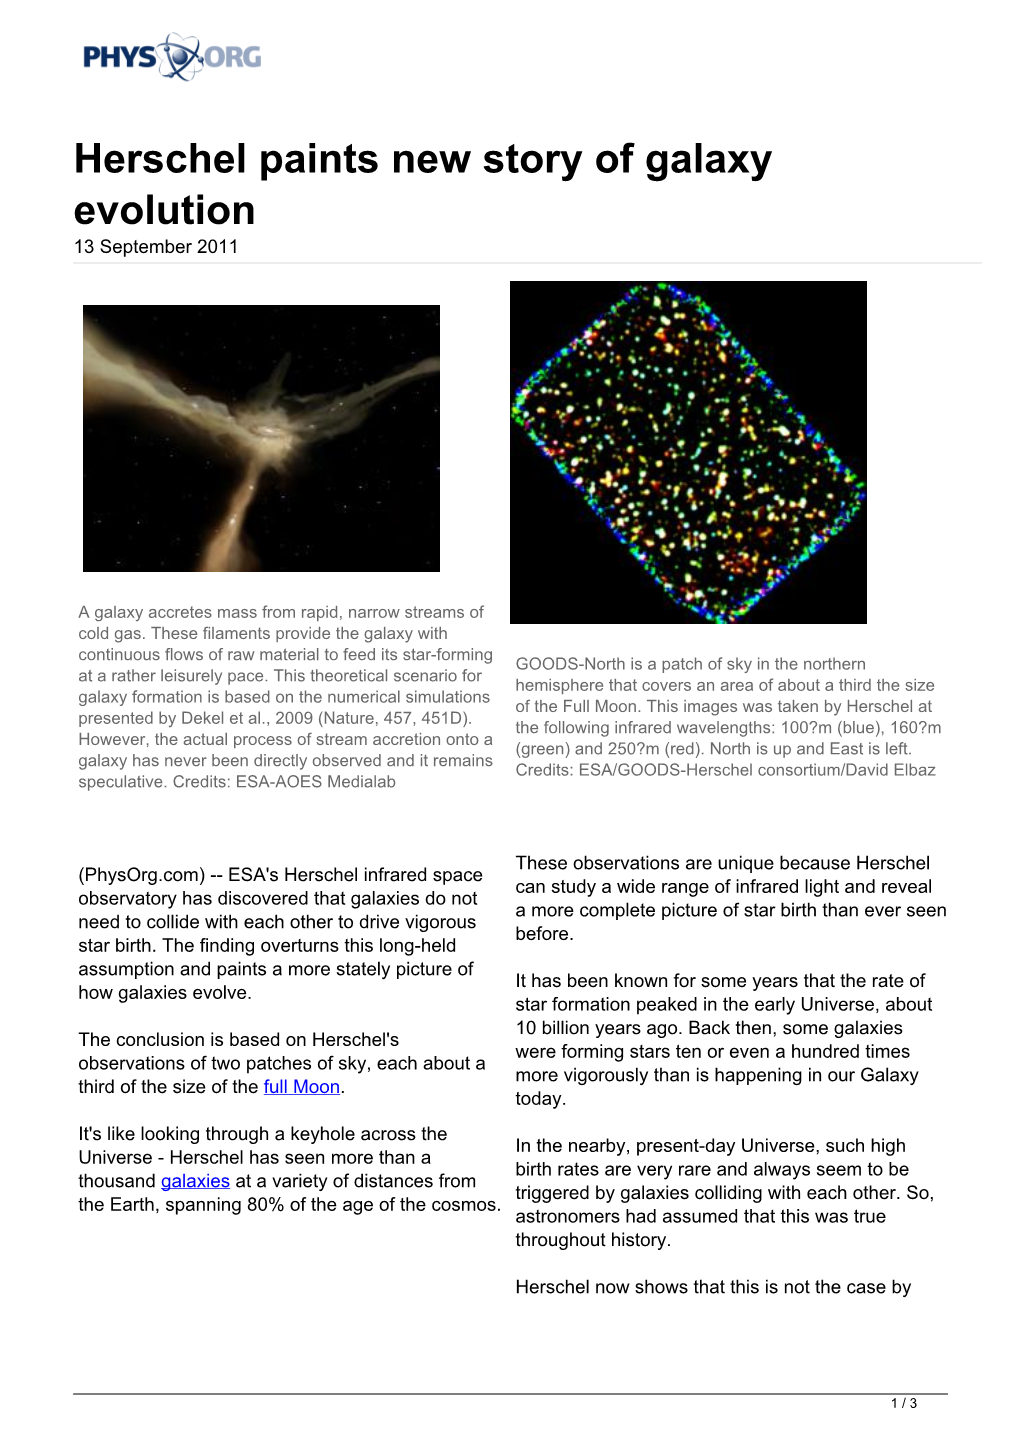 Herschel Paints New Story of Galaxy Evolution 13 September 2011